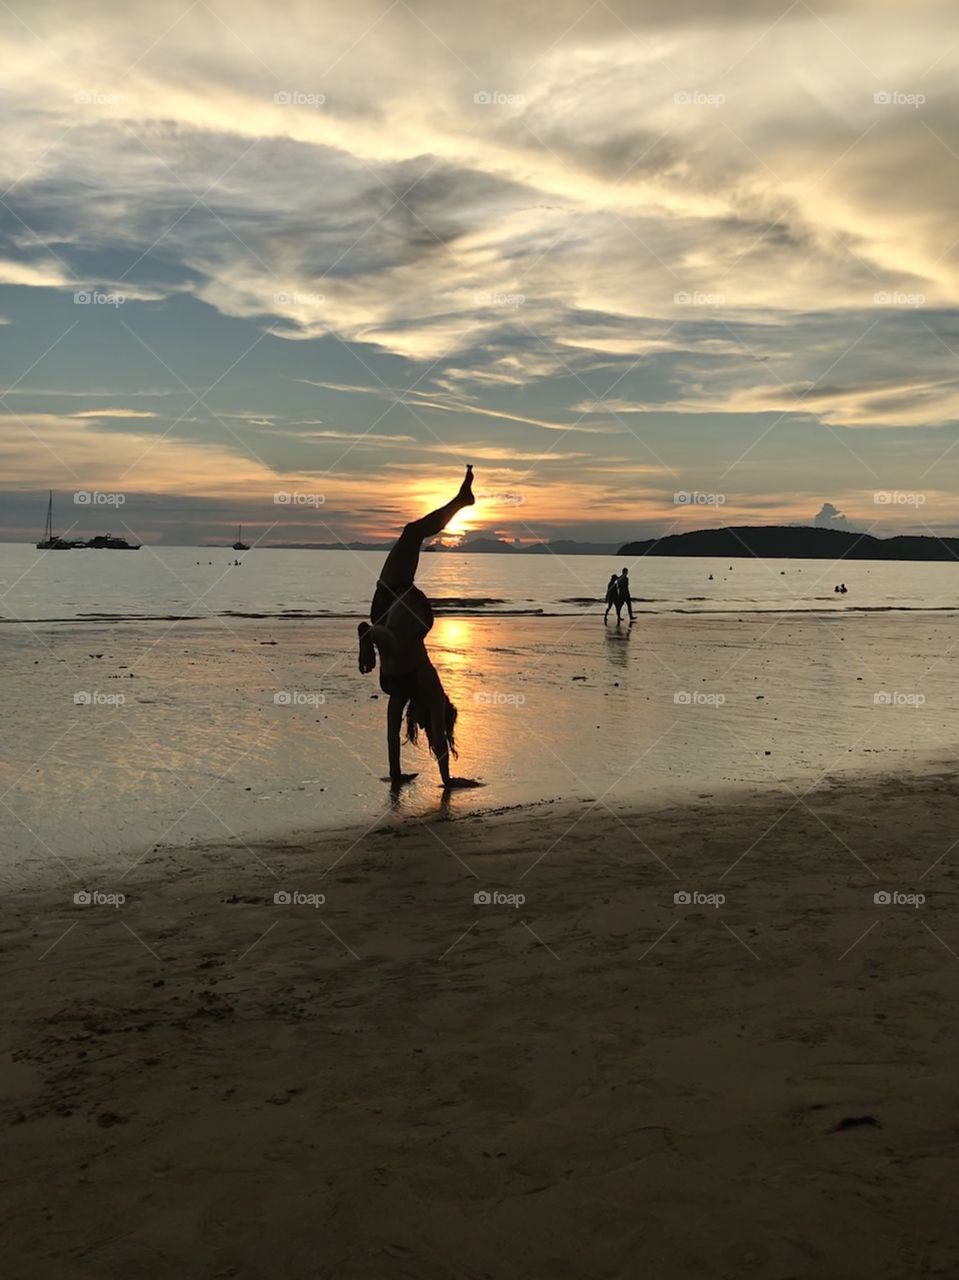 Handstands at sunset